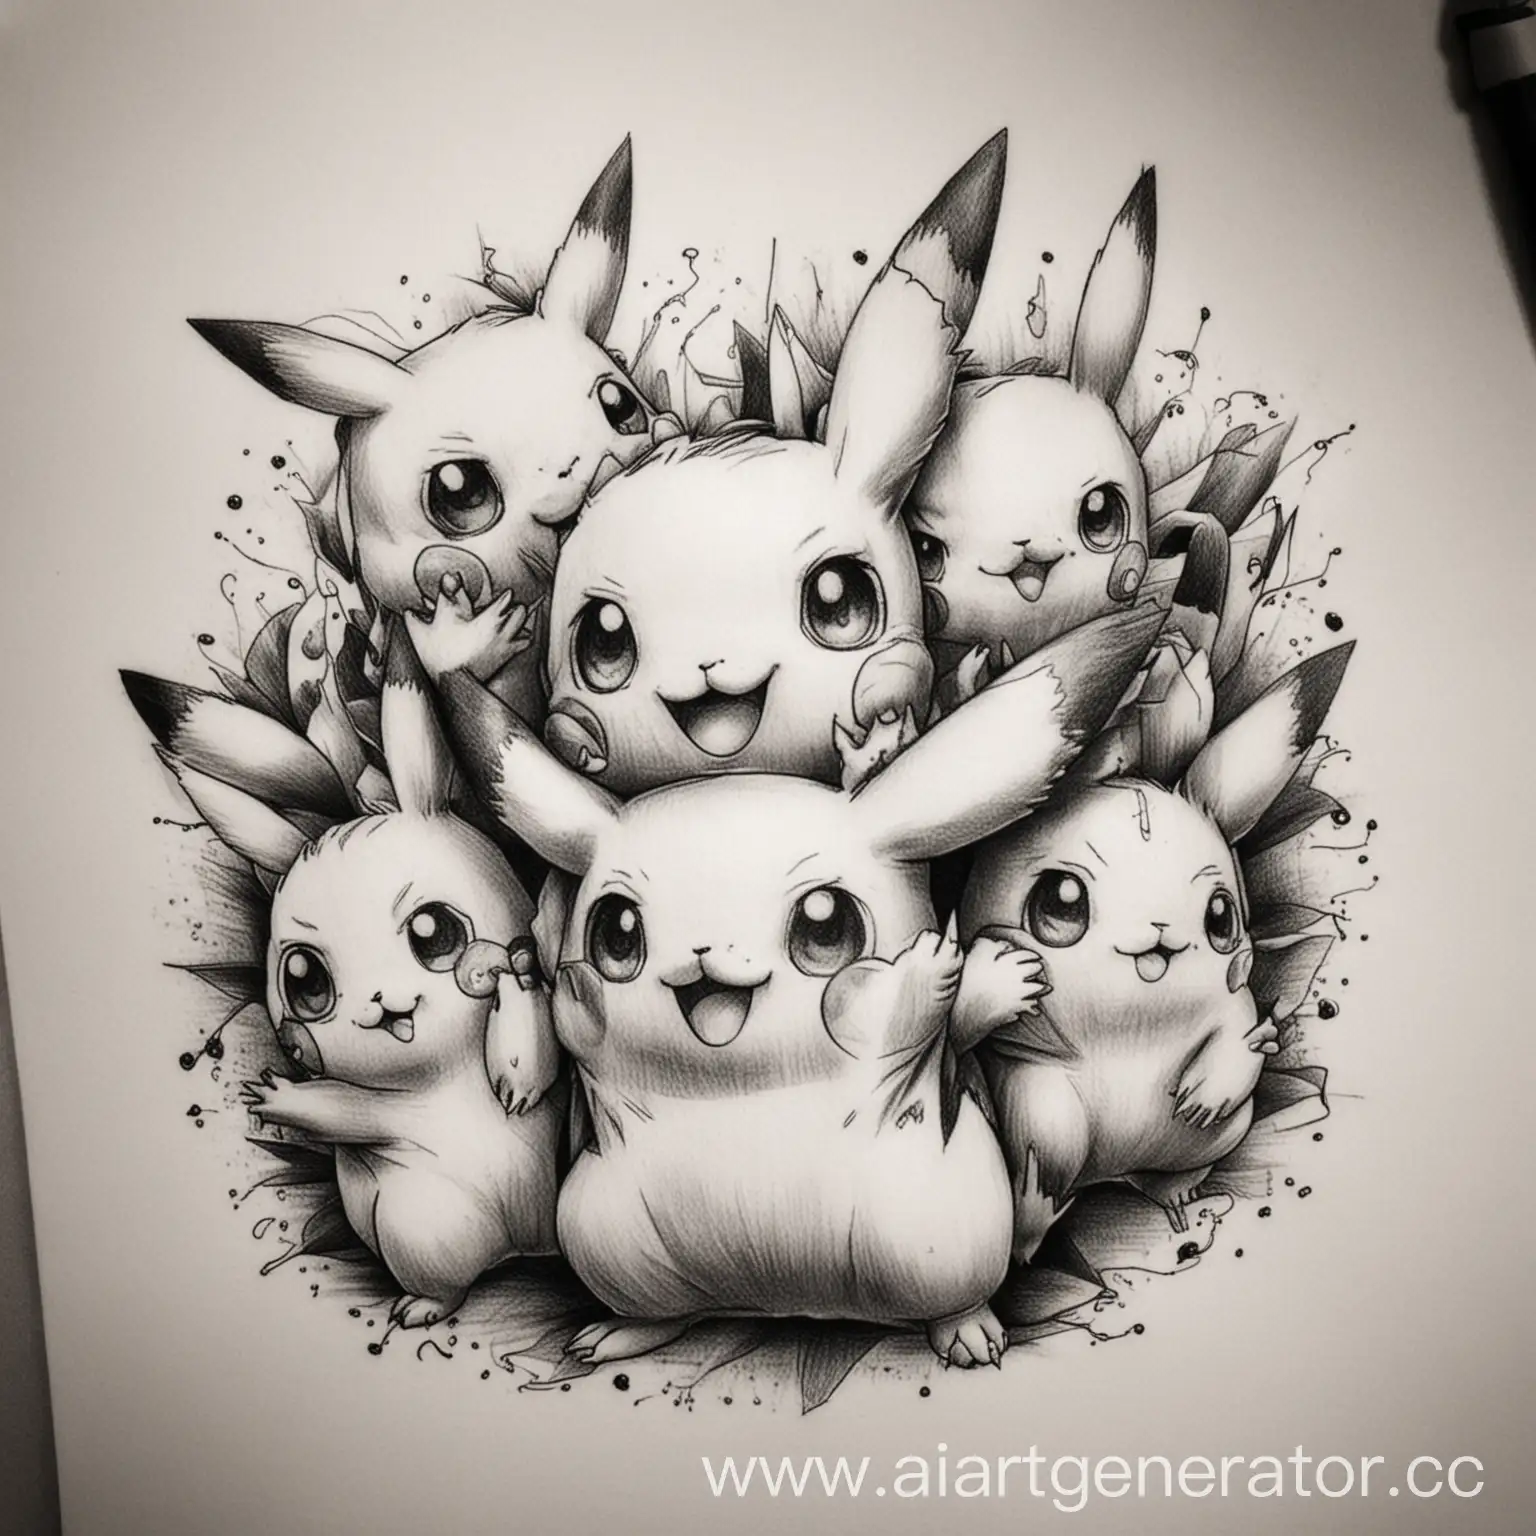 Four-Pikachu-Sketch-Tattoo-Playful-Pokemon-Huddle-Art